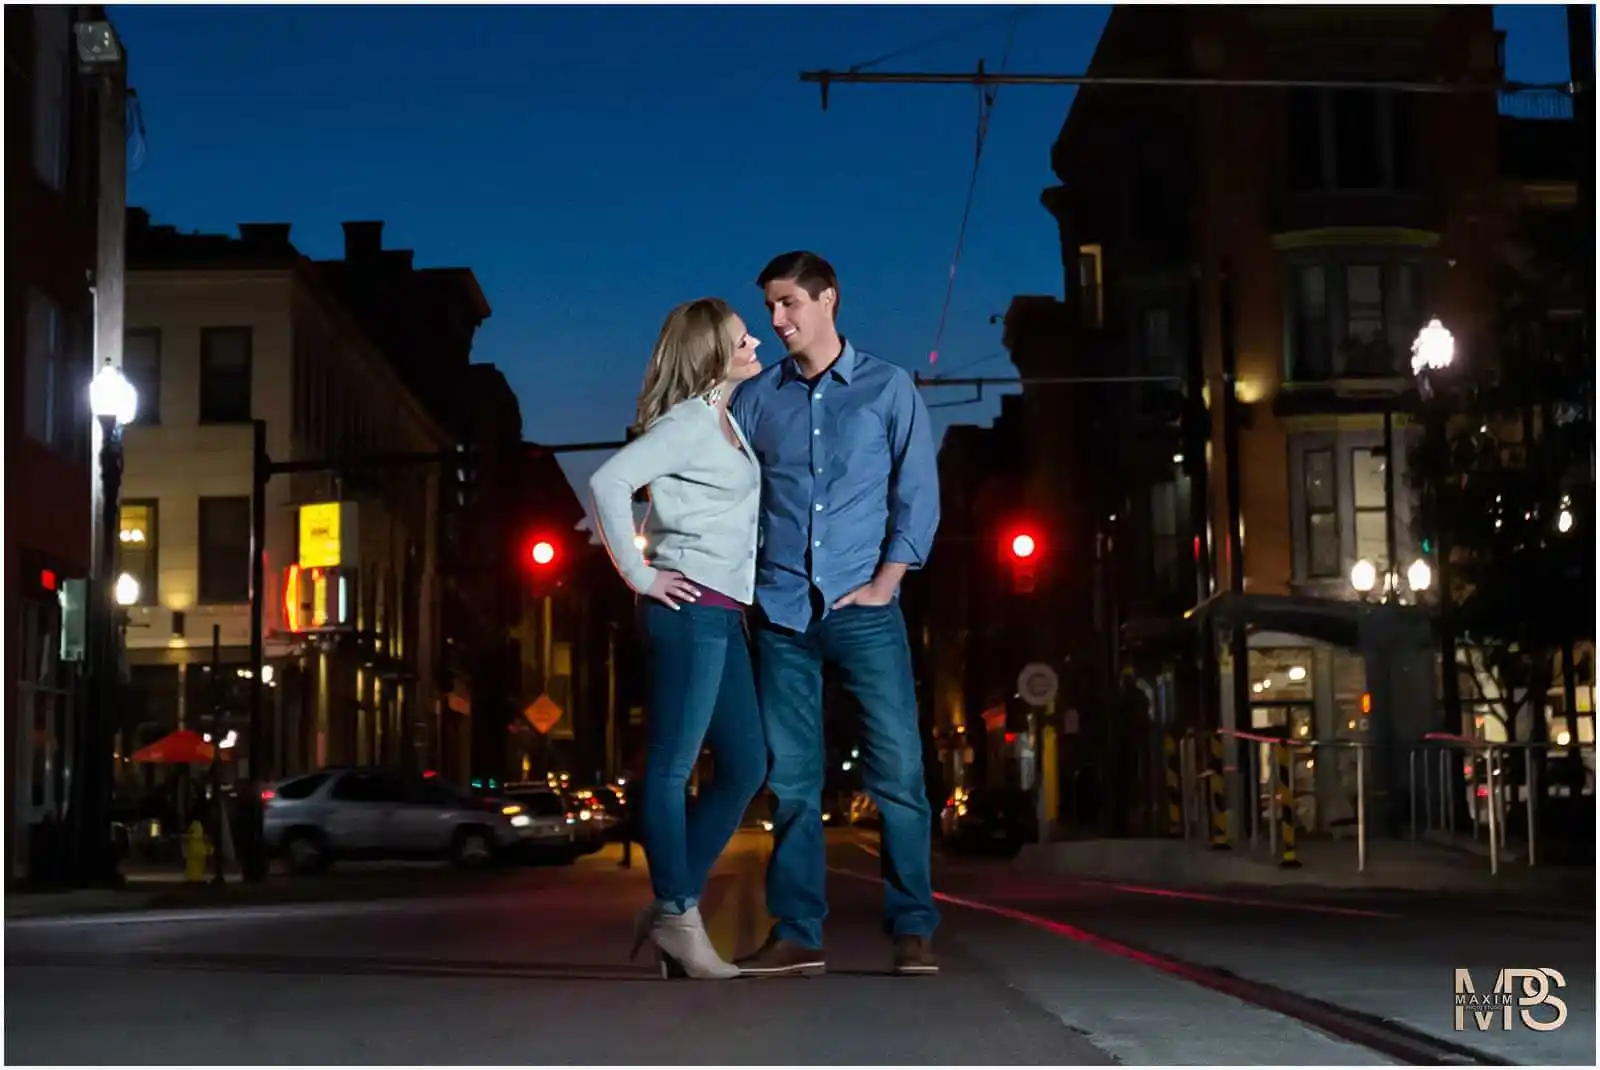 Romantic couple embracing on vibrant city street at night.